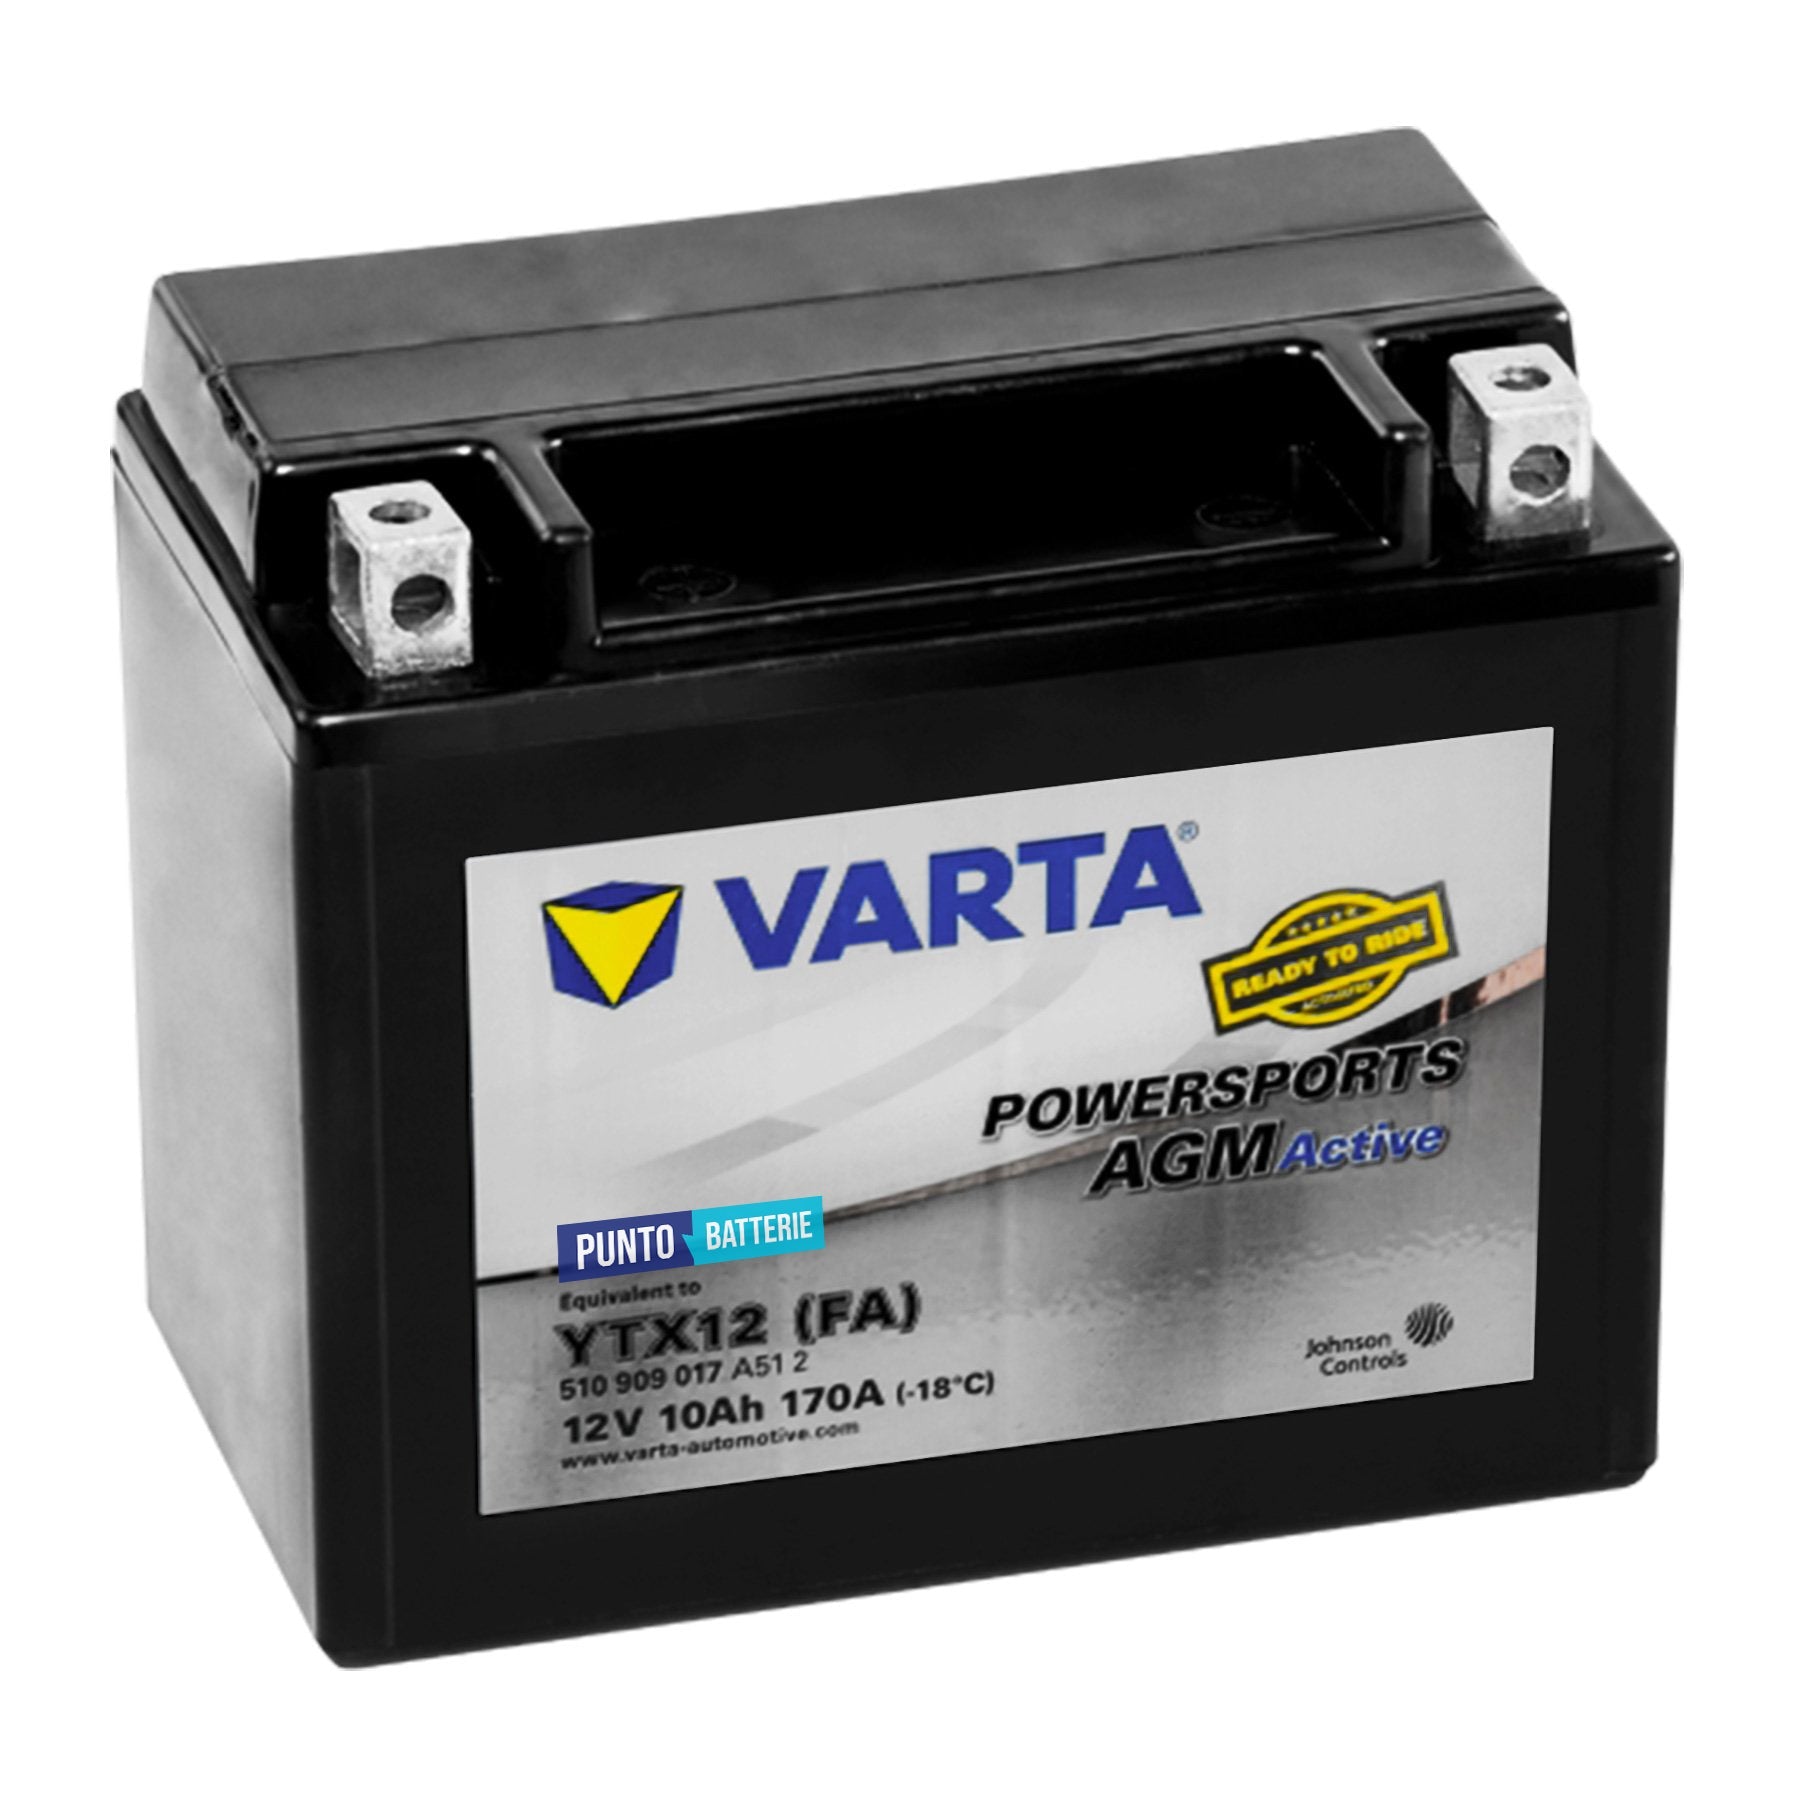 Batteria originale Varta Powersport AGM Active YTX12-FA, dimensioni 150 x 87 x 130, polo positivo a sinistra, 12 volt, 10 amperora, 170 ampere. Batteria per moto, scooter e powersport.